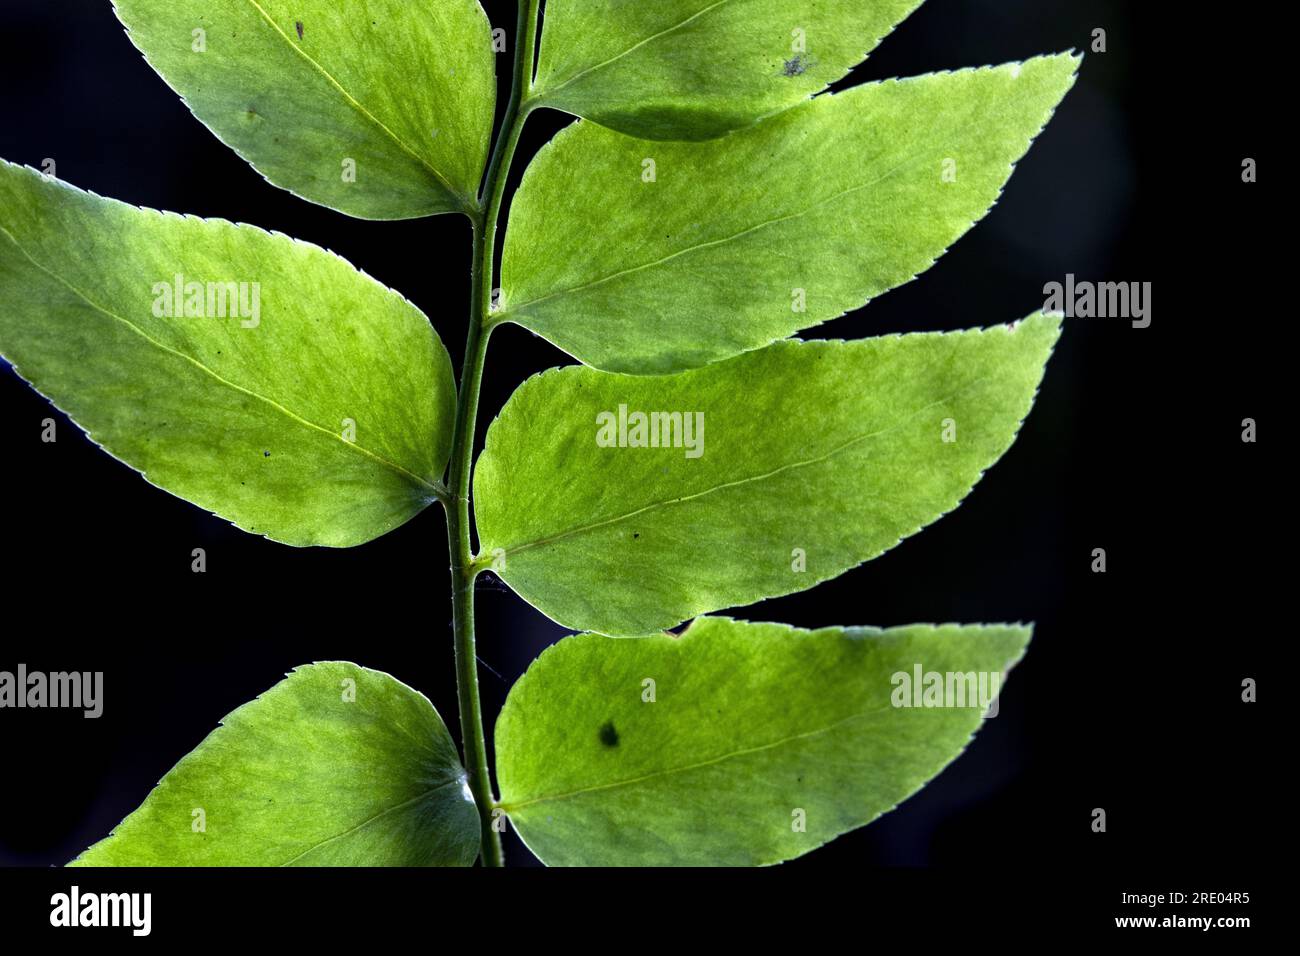 Asian Netvein Hollyfern, Asian Netvein Holly fern, Fortune's Holly Fern (Cyrtomium fortunei), upper side of leaf, leaflets against black background, Stock Photo